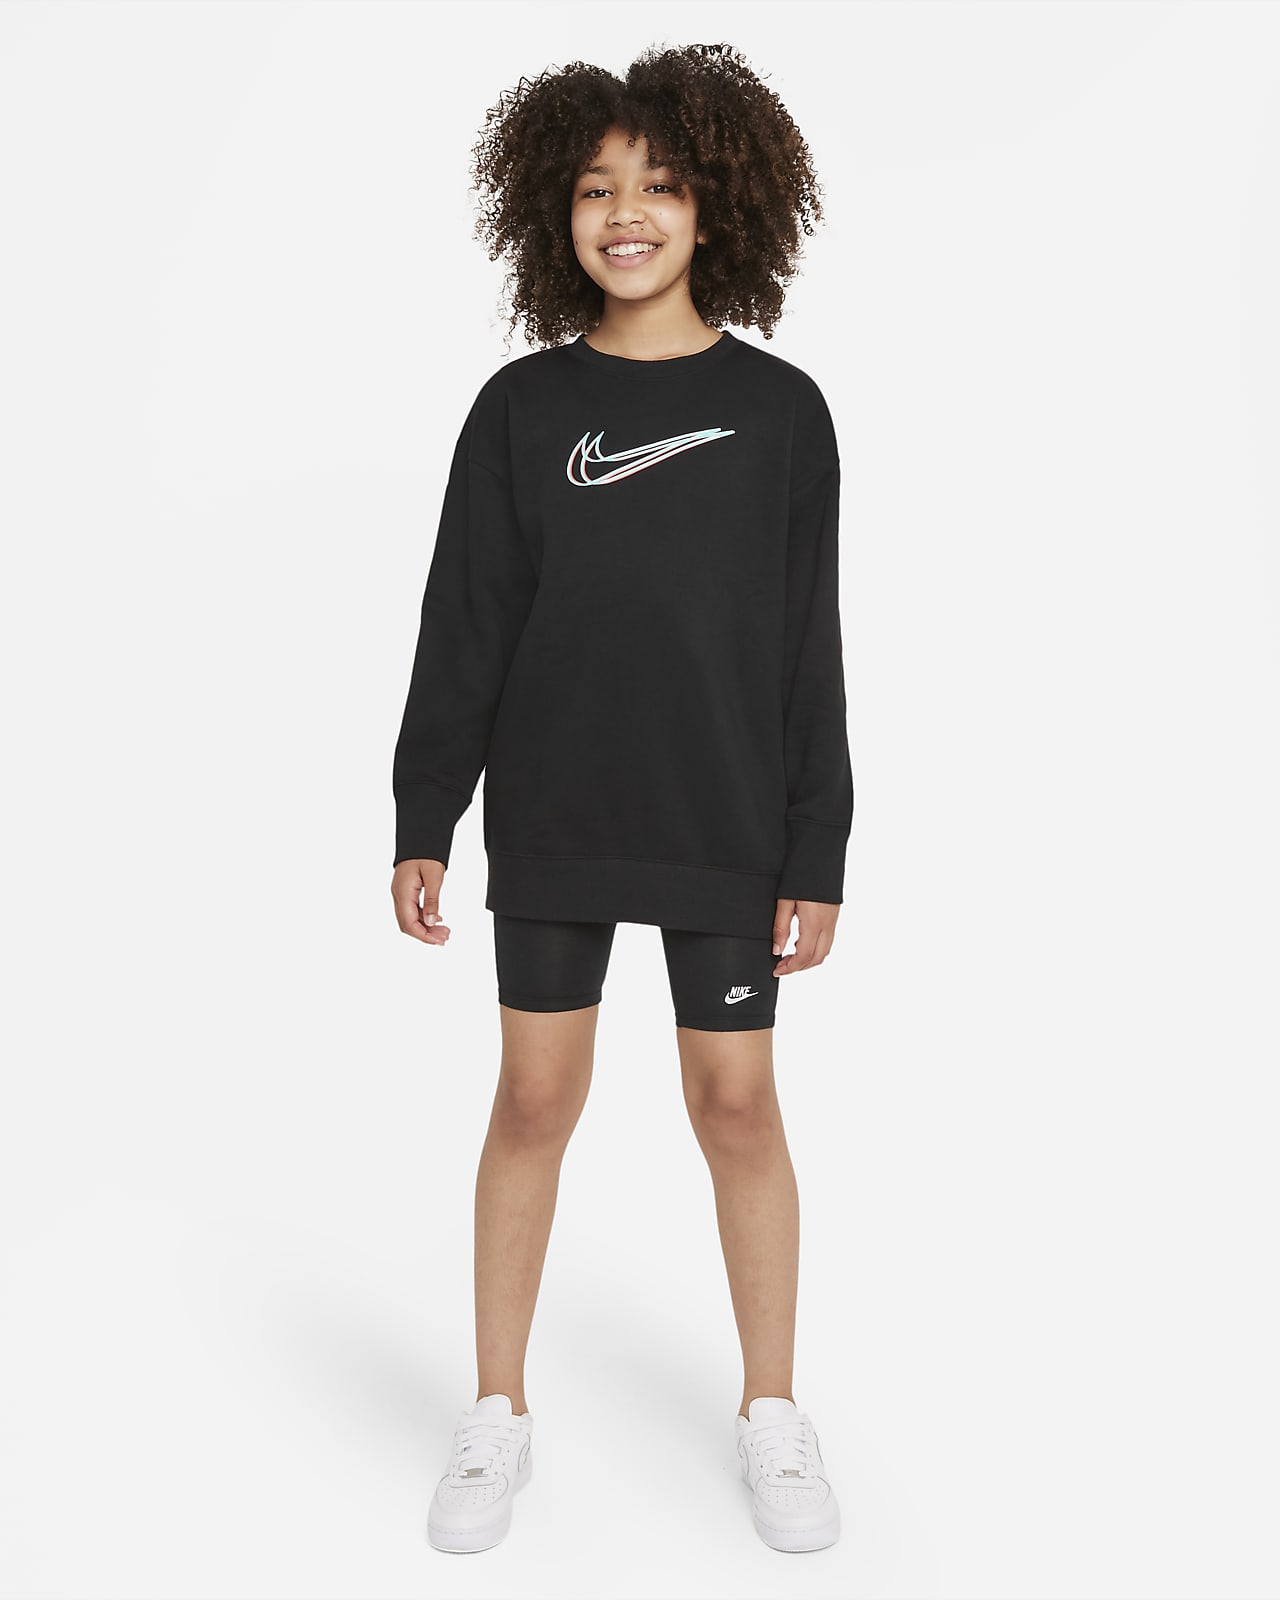 Nike Sportswear Big Kids' (Girls') Dance Sweatshirt. Nike.com